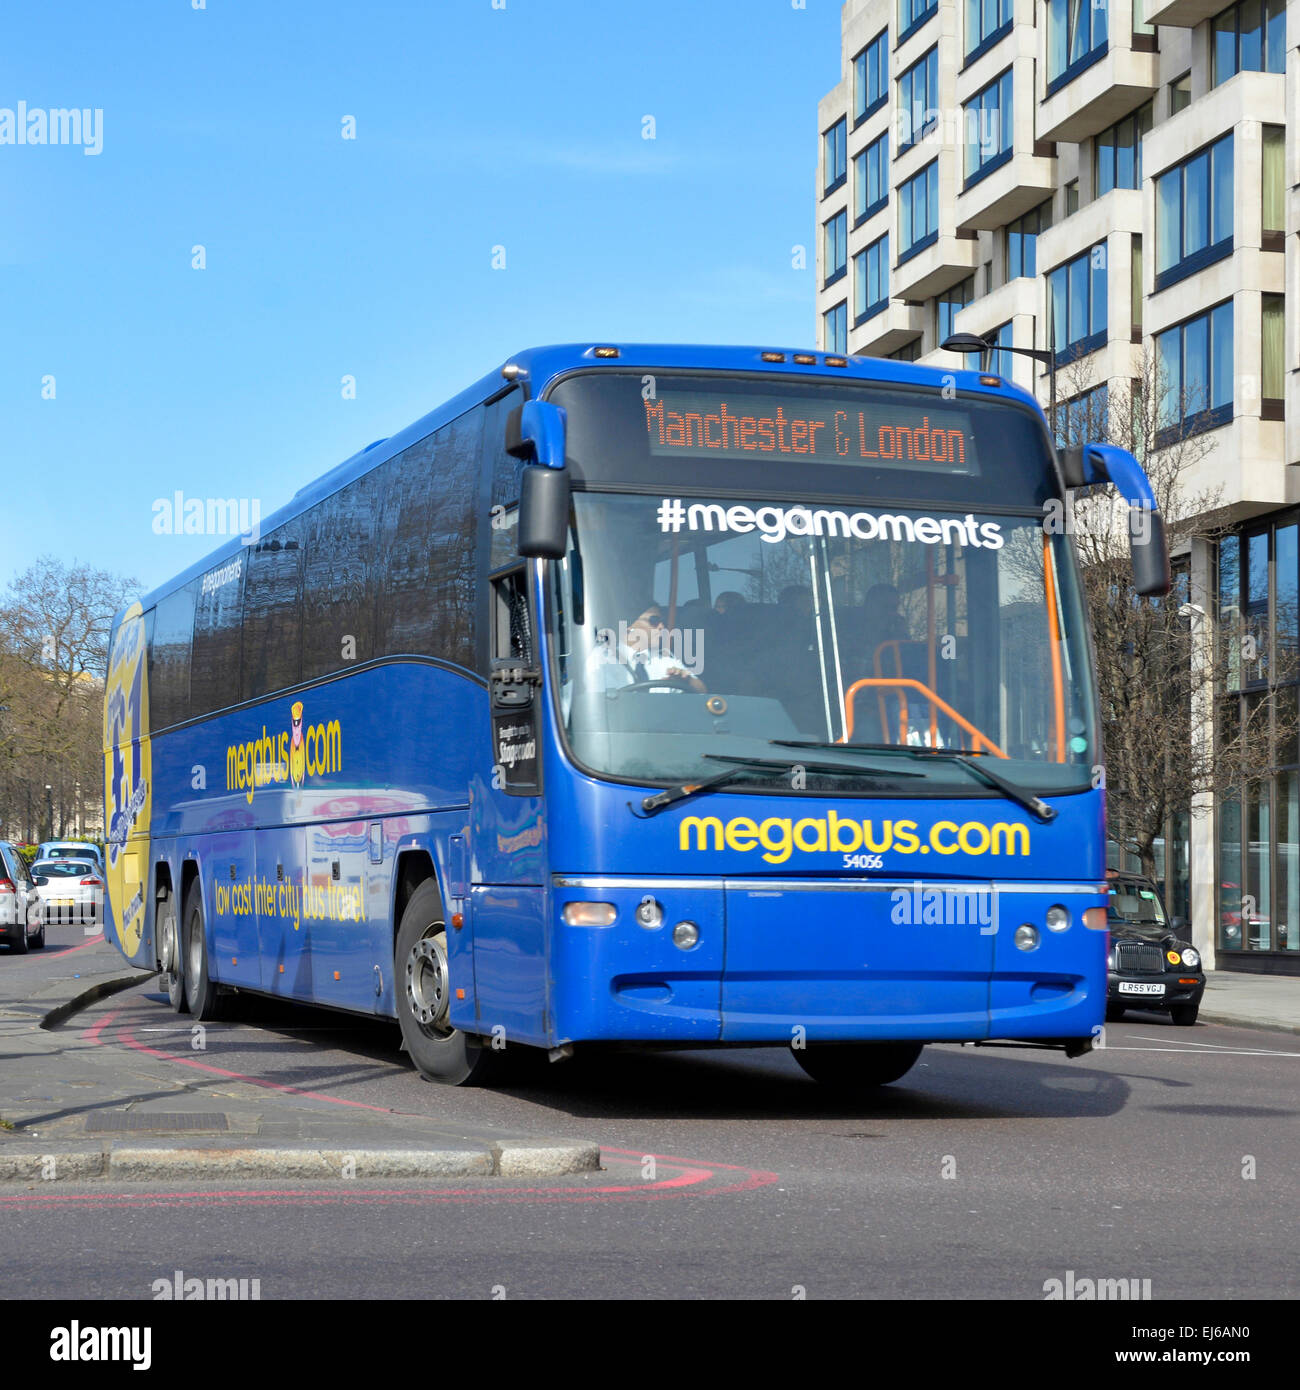 Megabus (Marke durch Stagecoach Group) auf London nach Manchester Route (Number Plate entfernt) Megabus.com Stockfoto